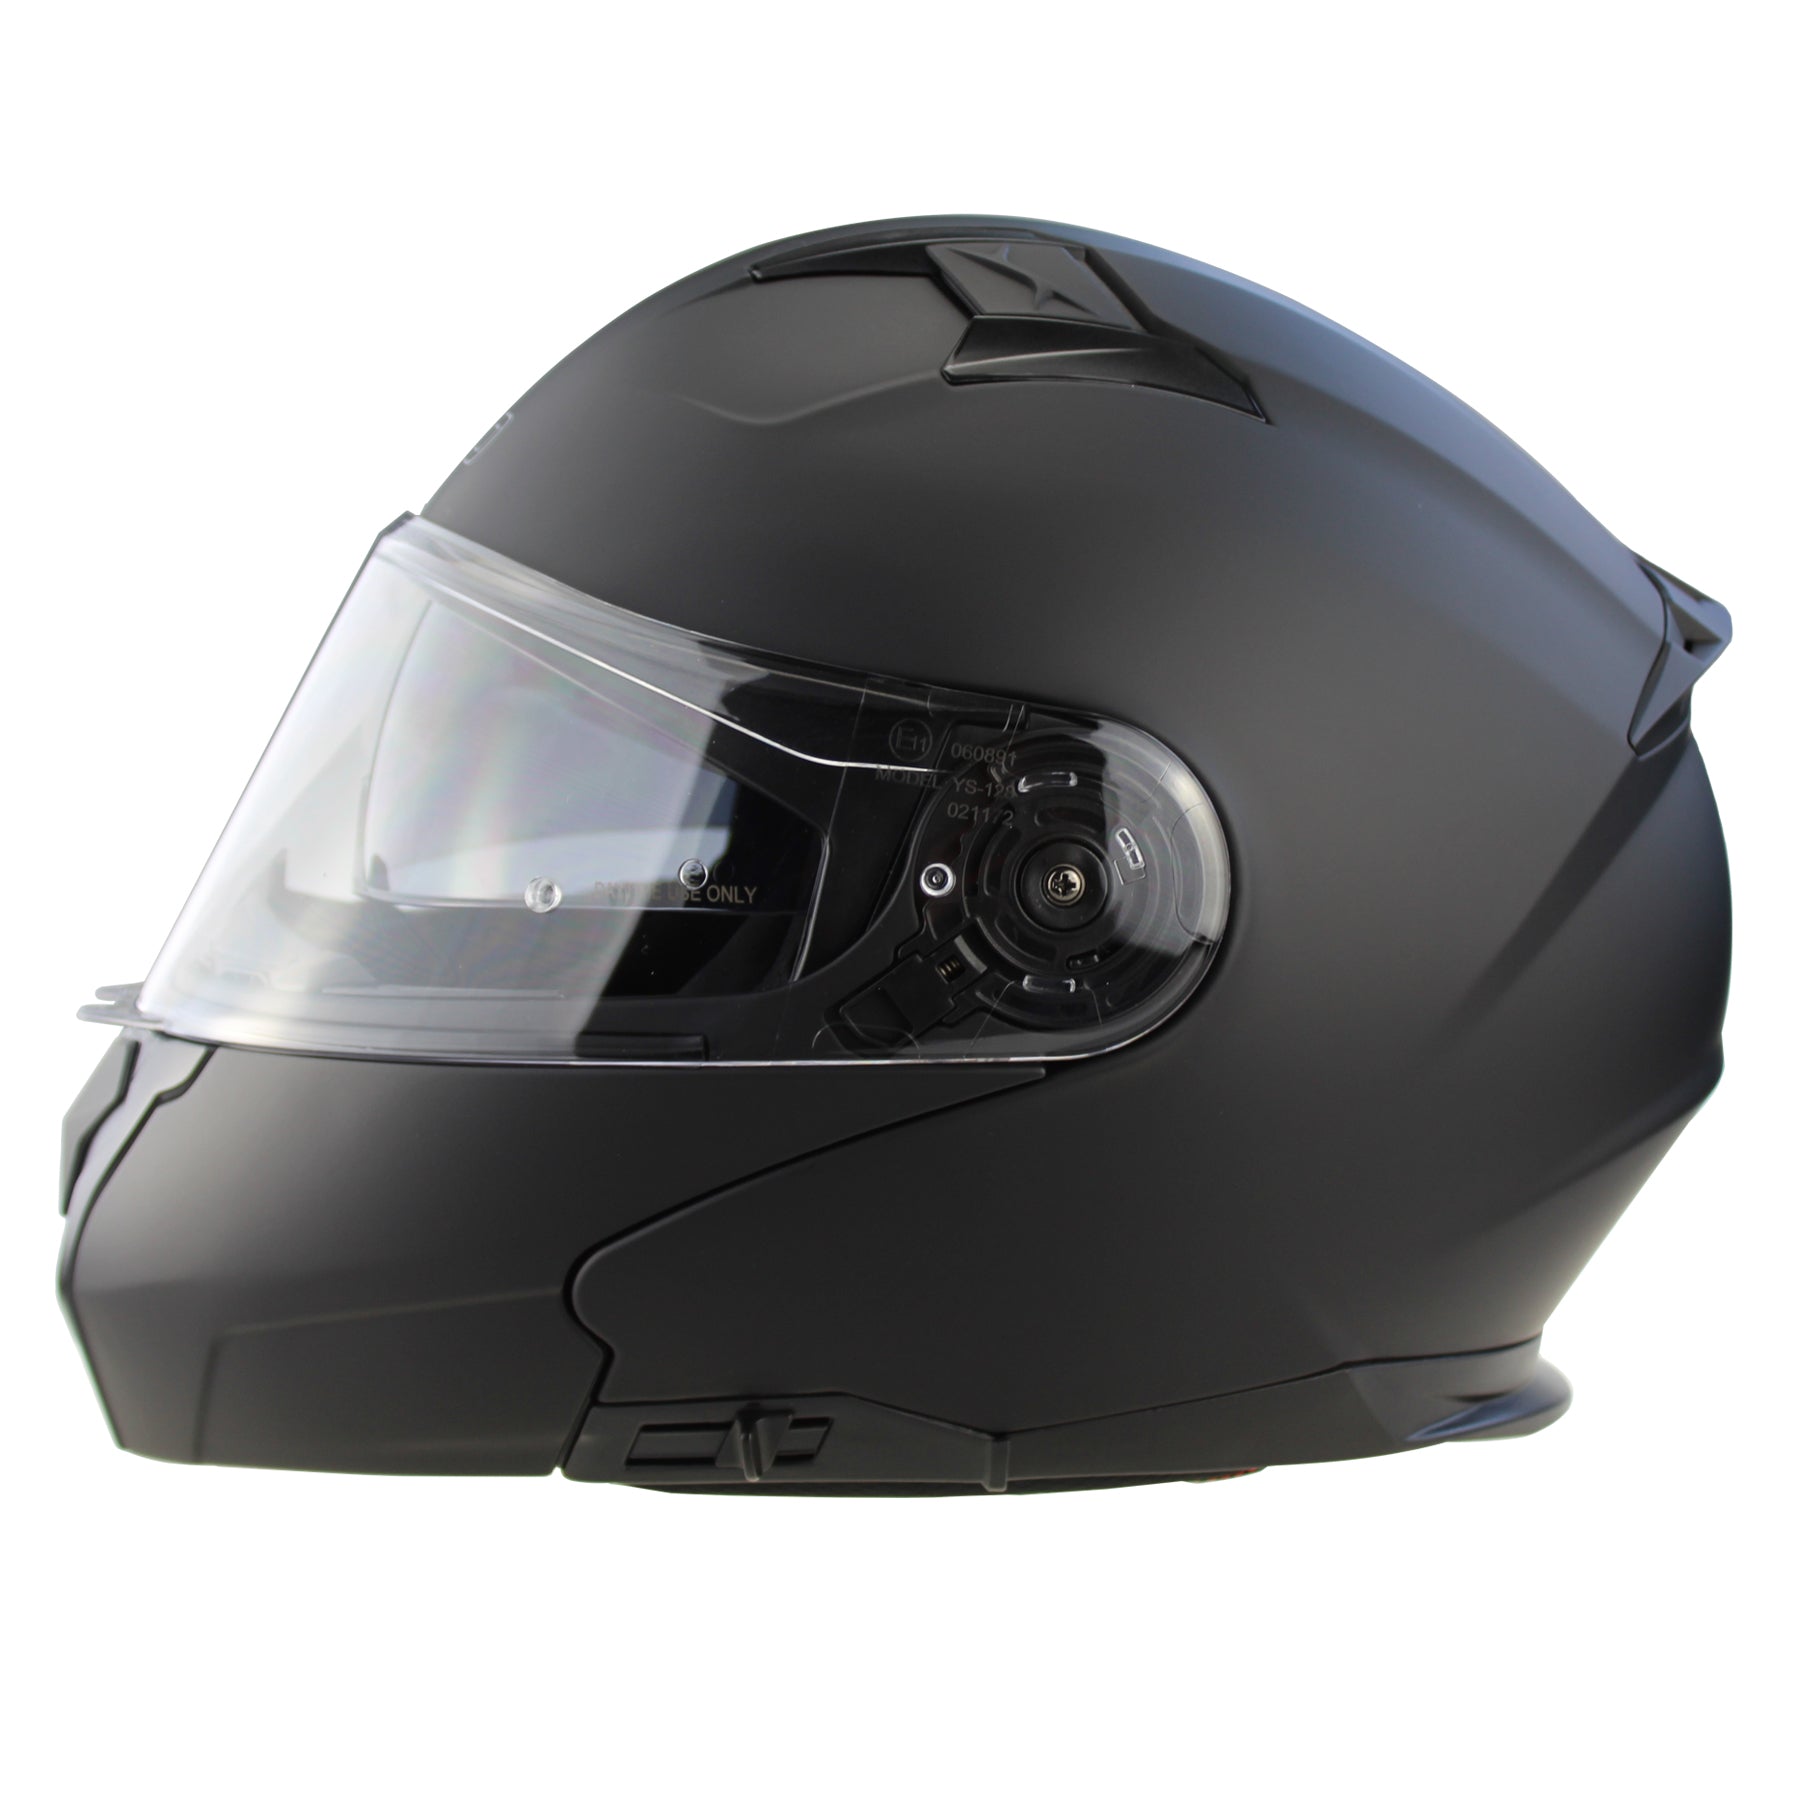 Riderwear | 3GO E335 Flip-Up Modular Helmet